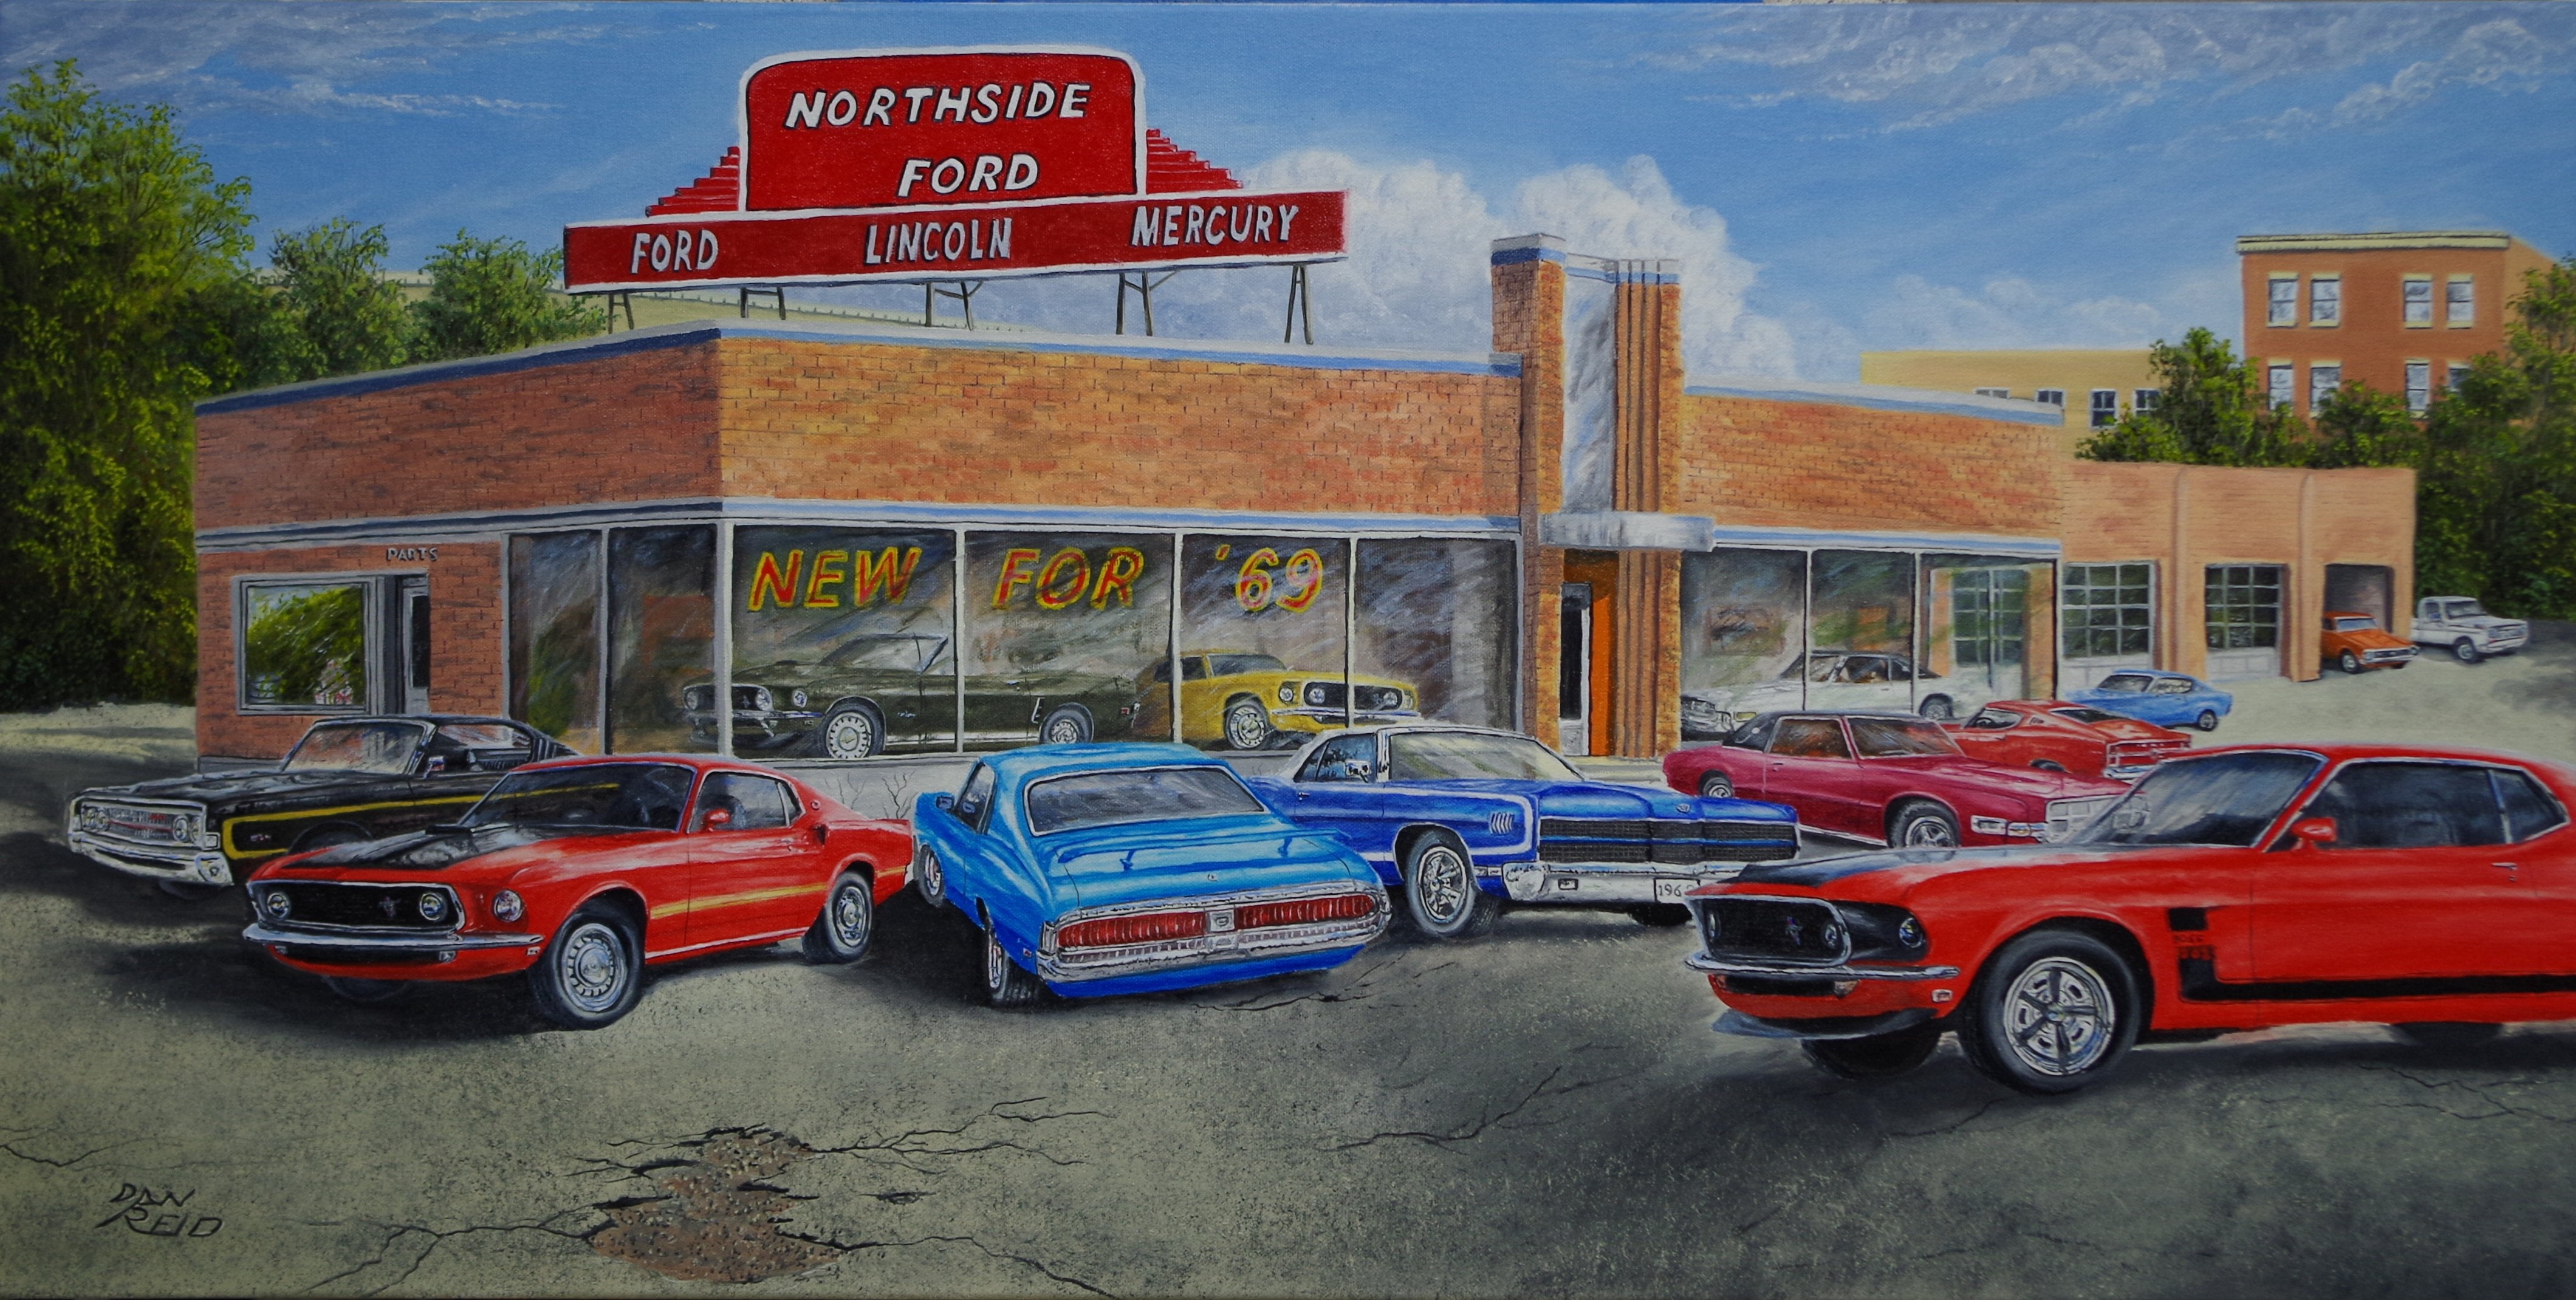 Ford Dealership 1969 Stretched Canvas Artwork by Dan Reid 17-09